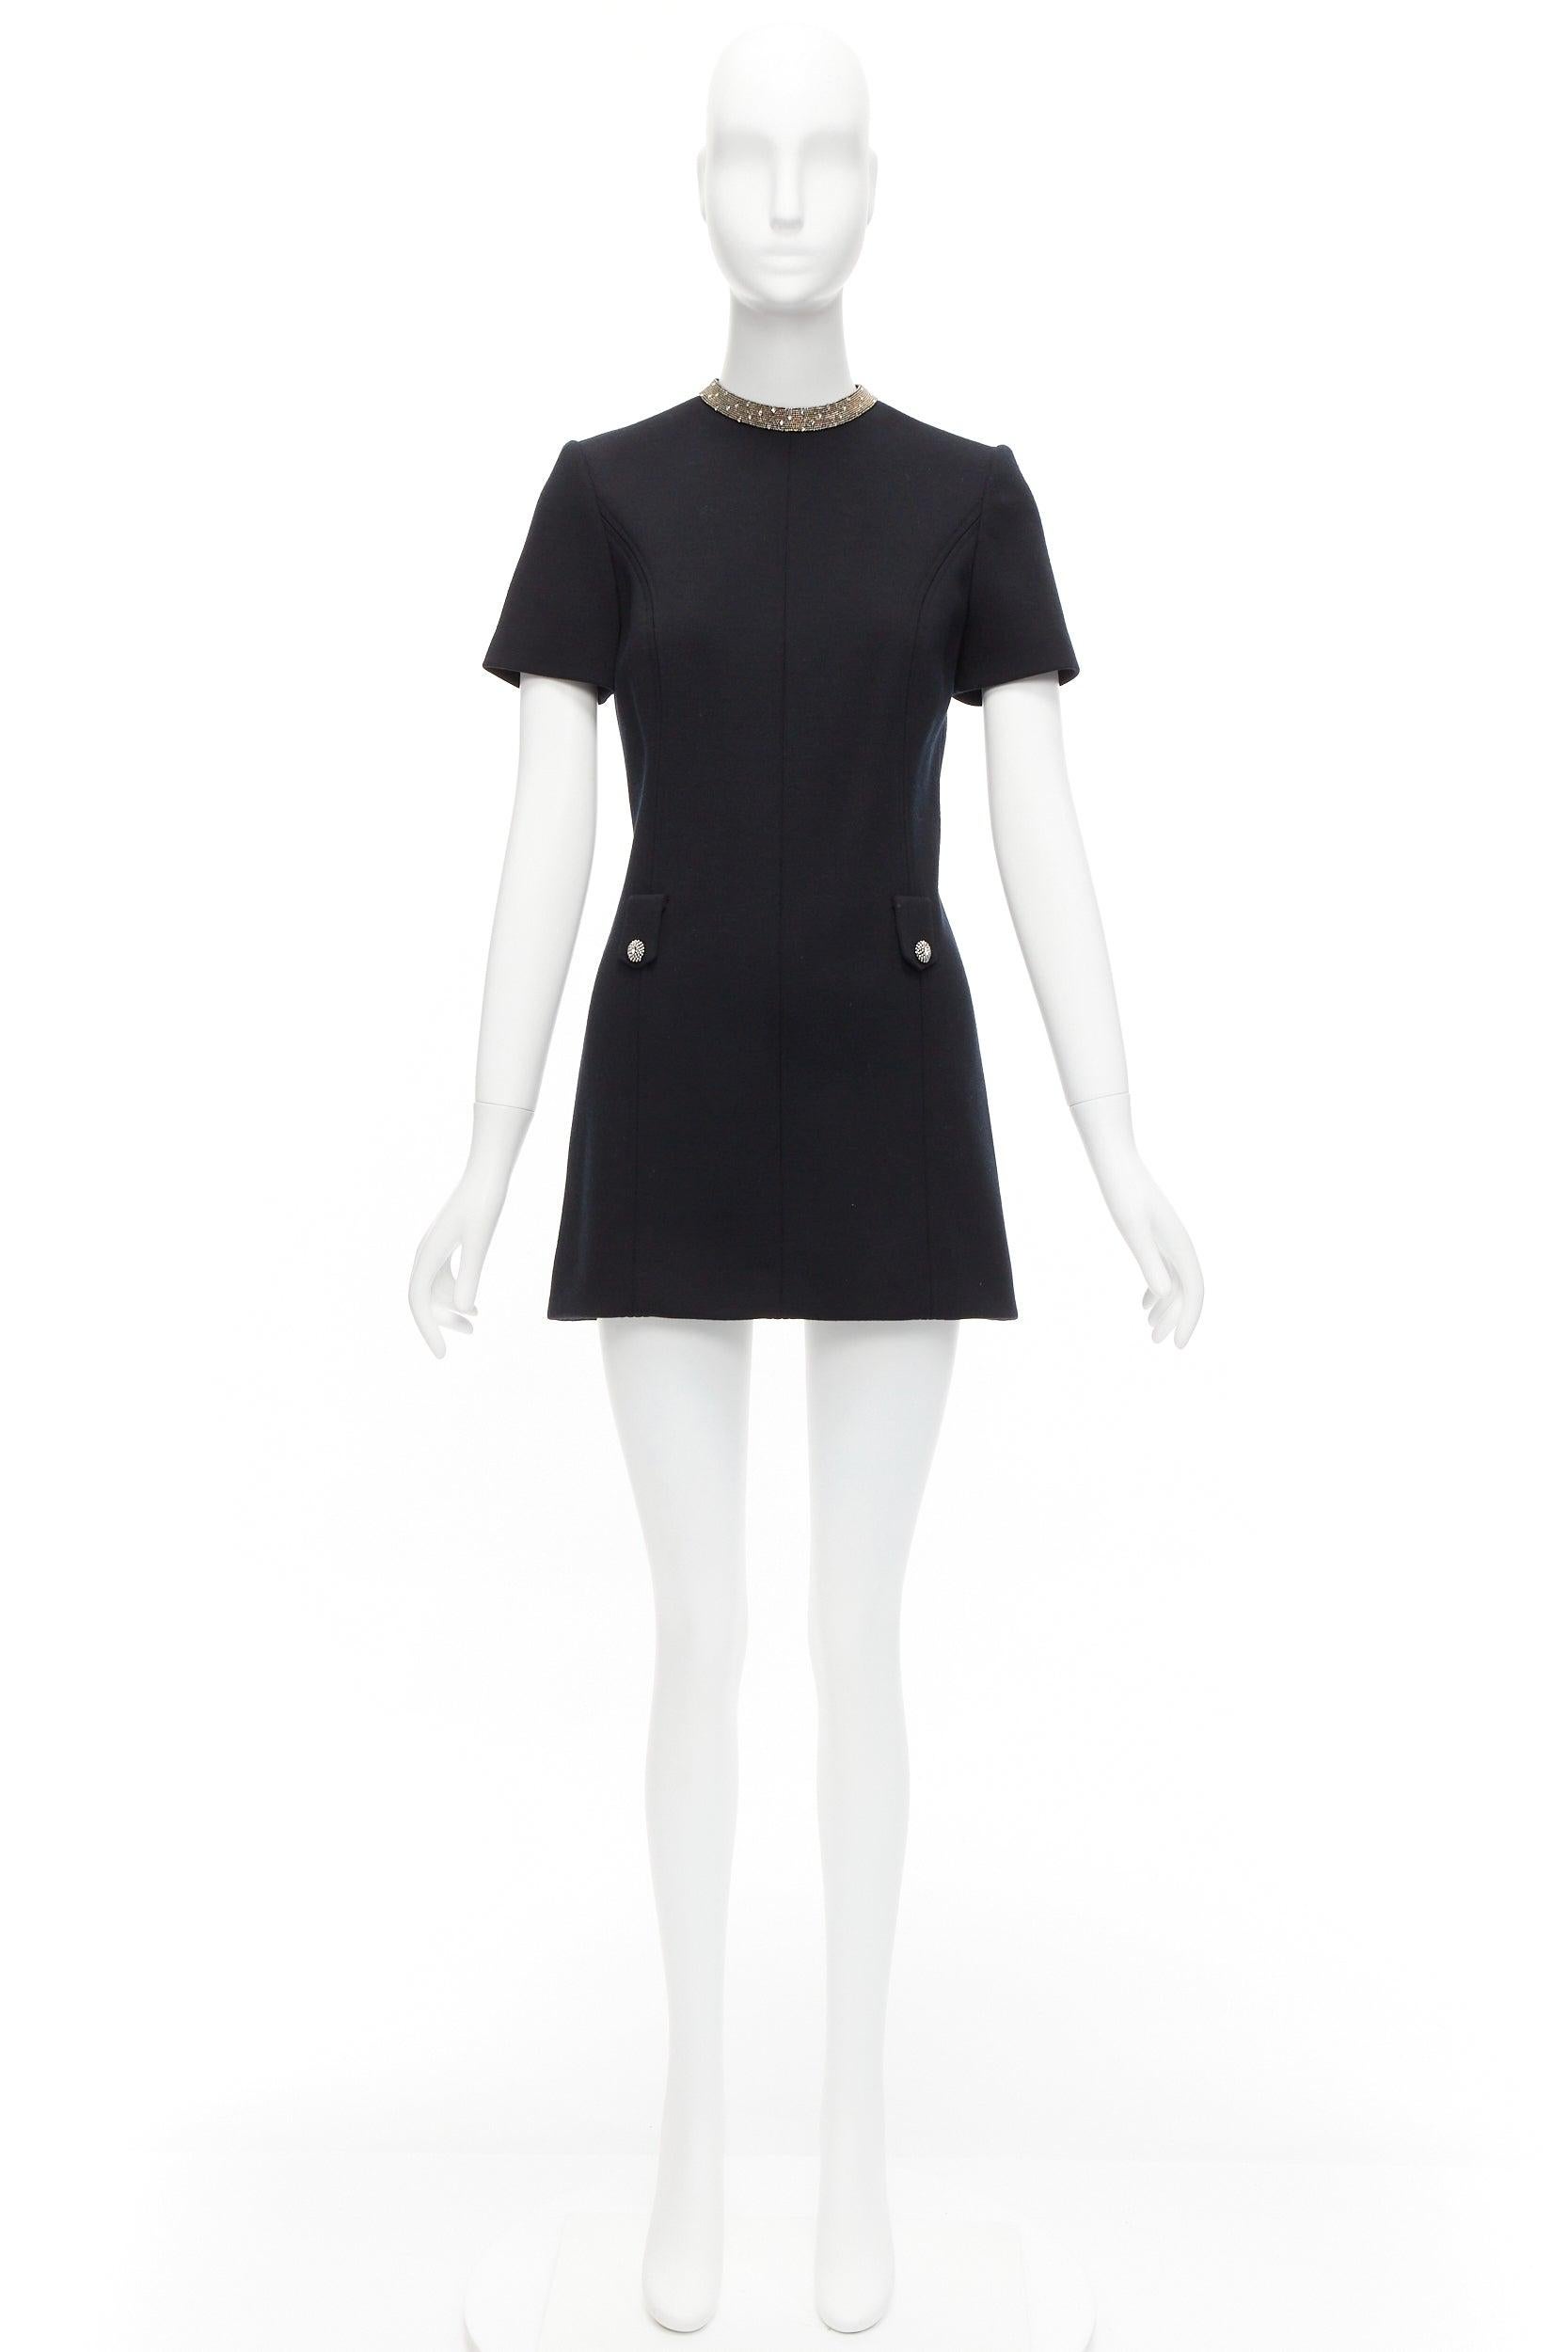 SAINT LAURENT black 100% wool diamante collar silk lined shift dress FR36 S For Sale 6